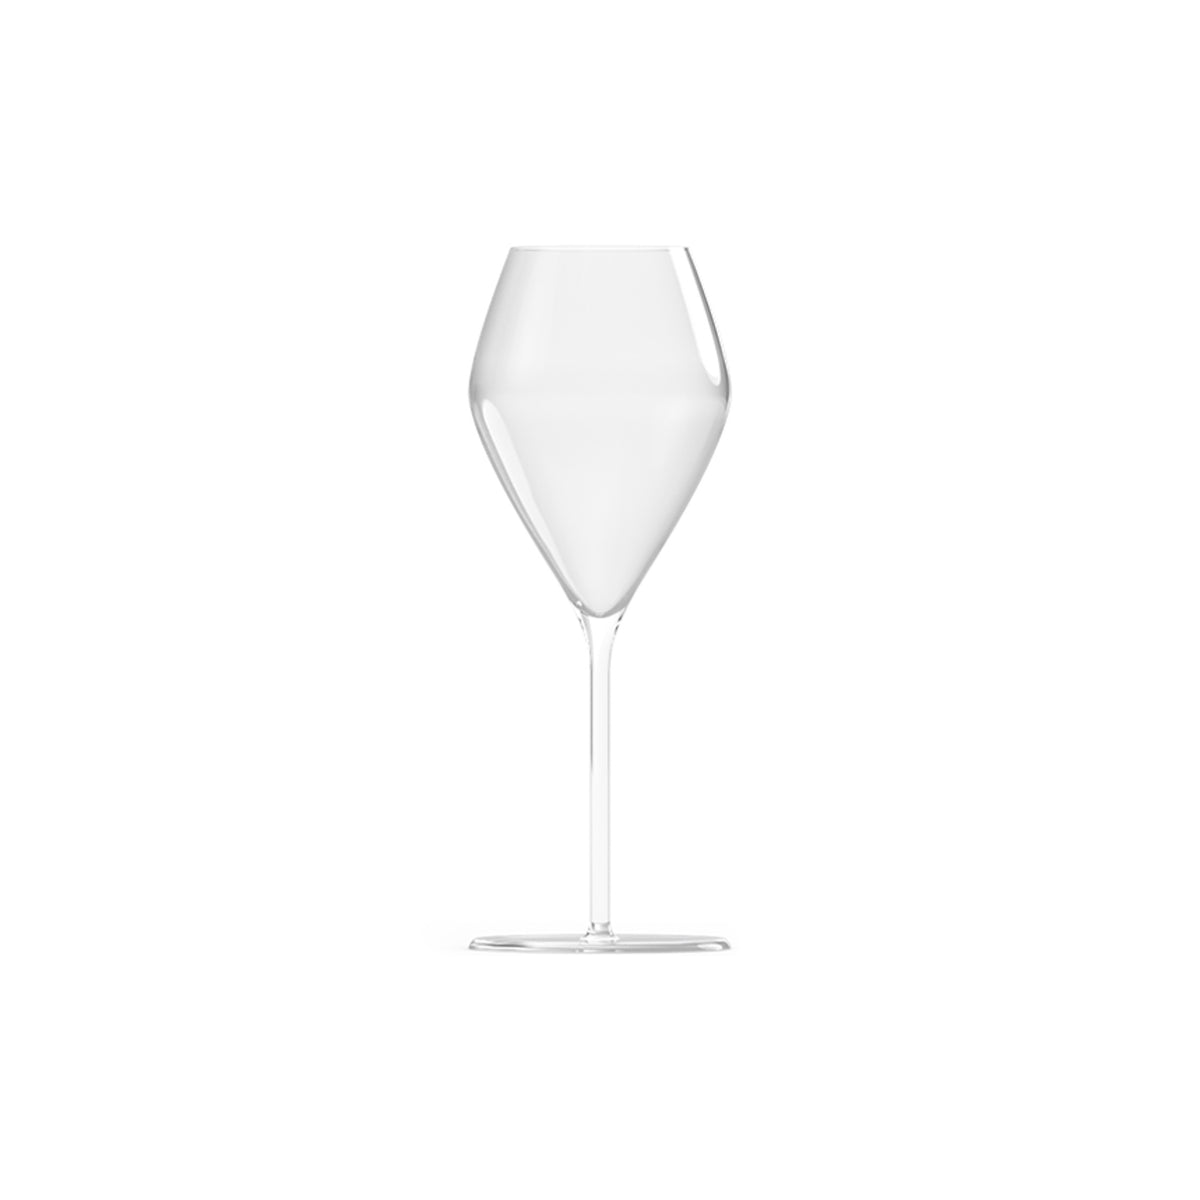 GRASSL GLASS Elemental Series &quot;Champagne&quot; (Box of 6)